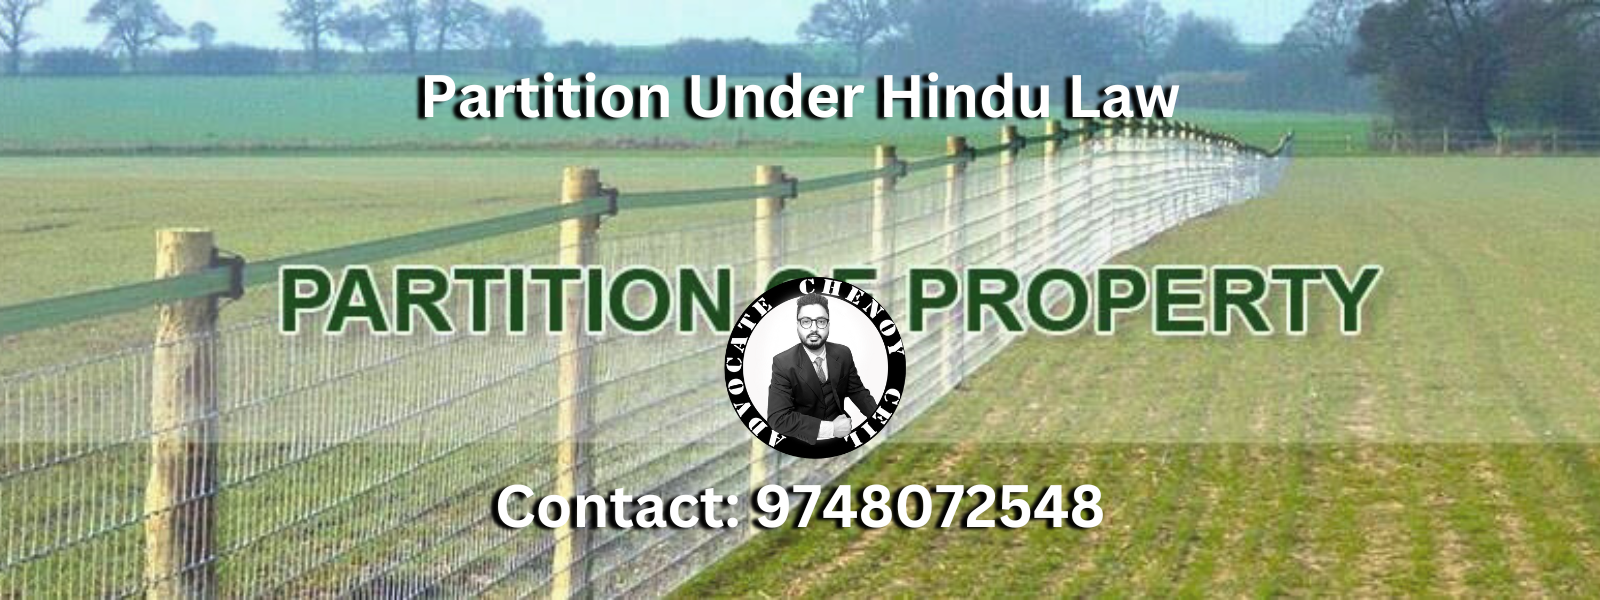 Partition under Hindu Law